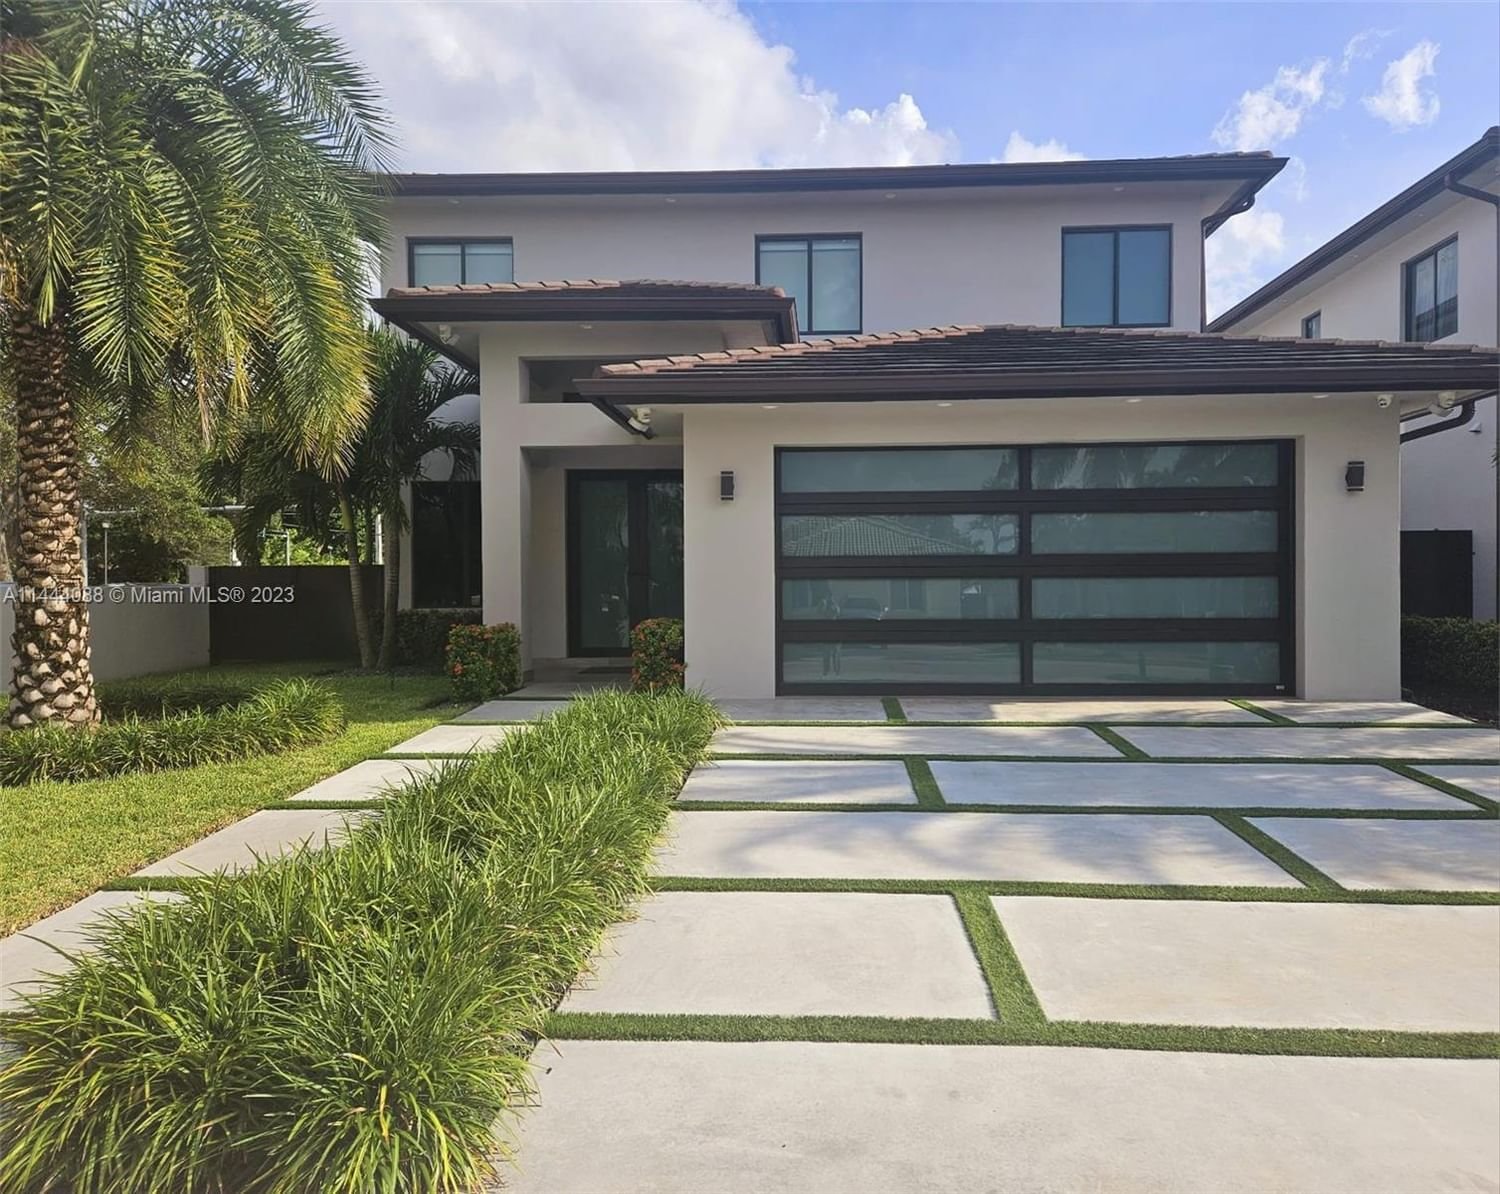 Real estate property located at 8706 146th Ln, Miami-Dade County, Miami Lakes, FL